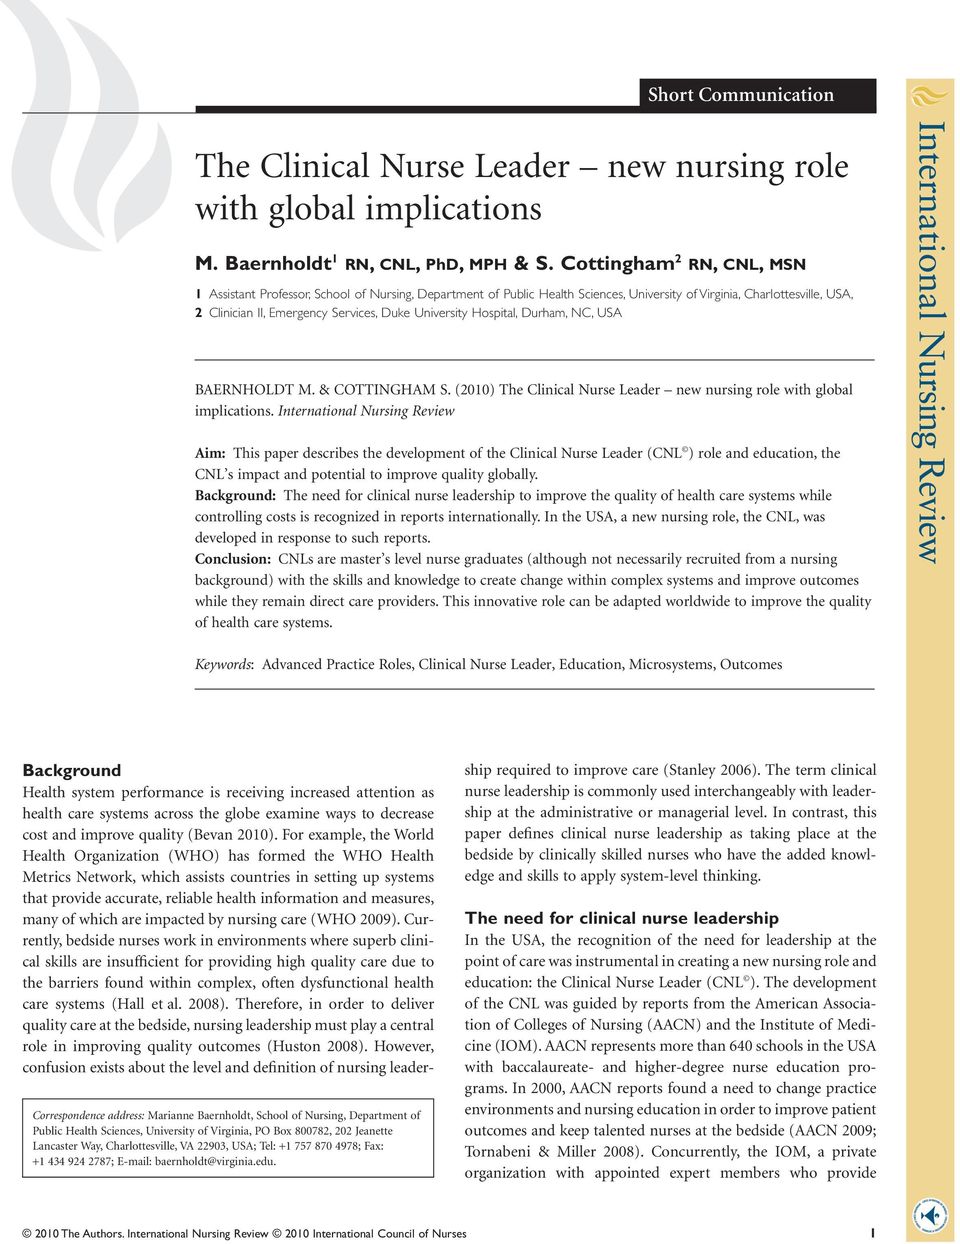 University Hospital, Durham, NC, USA BAERNHOLDT M. & COTTINGHAM S. (2010) The Clinical Nurse Leader new nursing role with global implications.